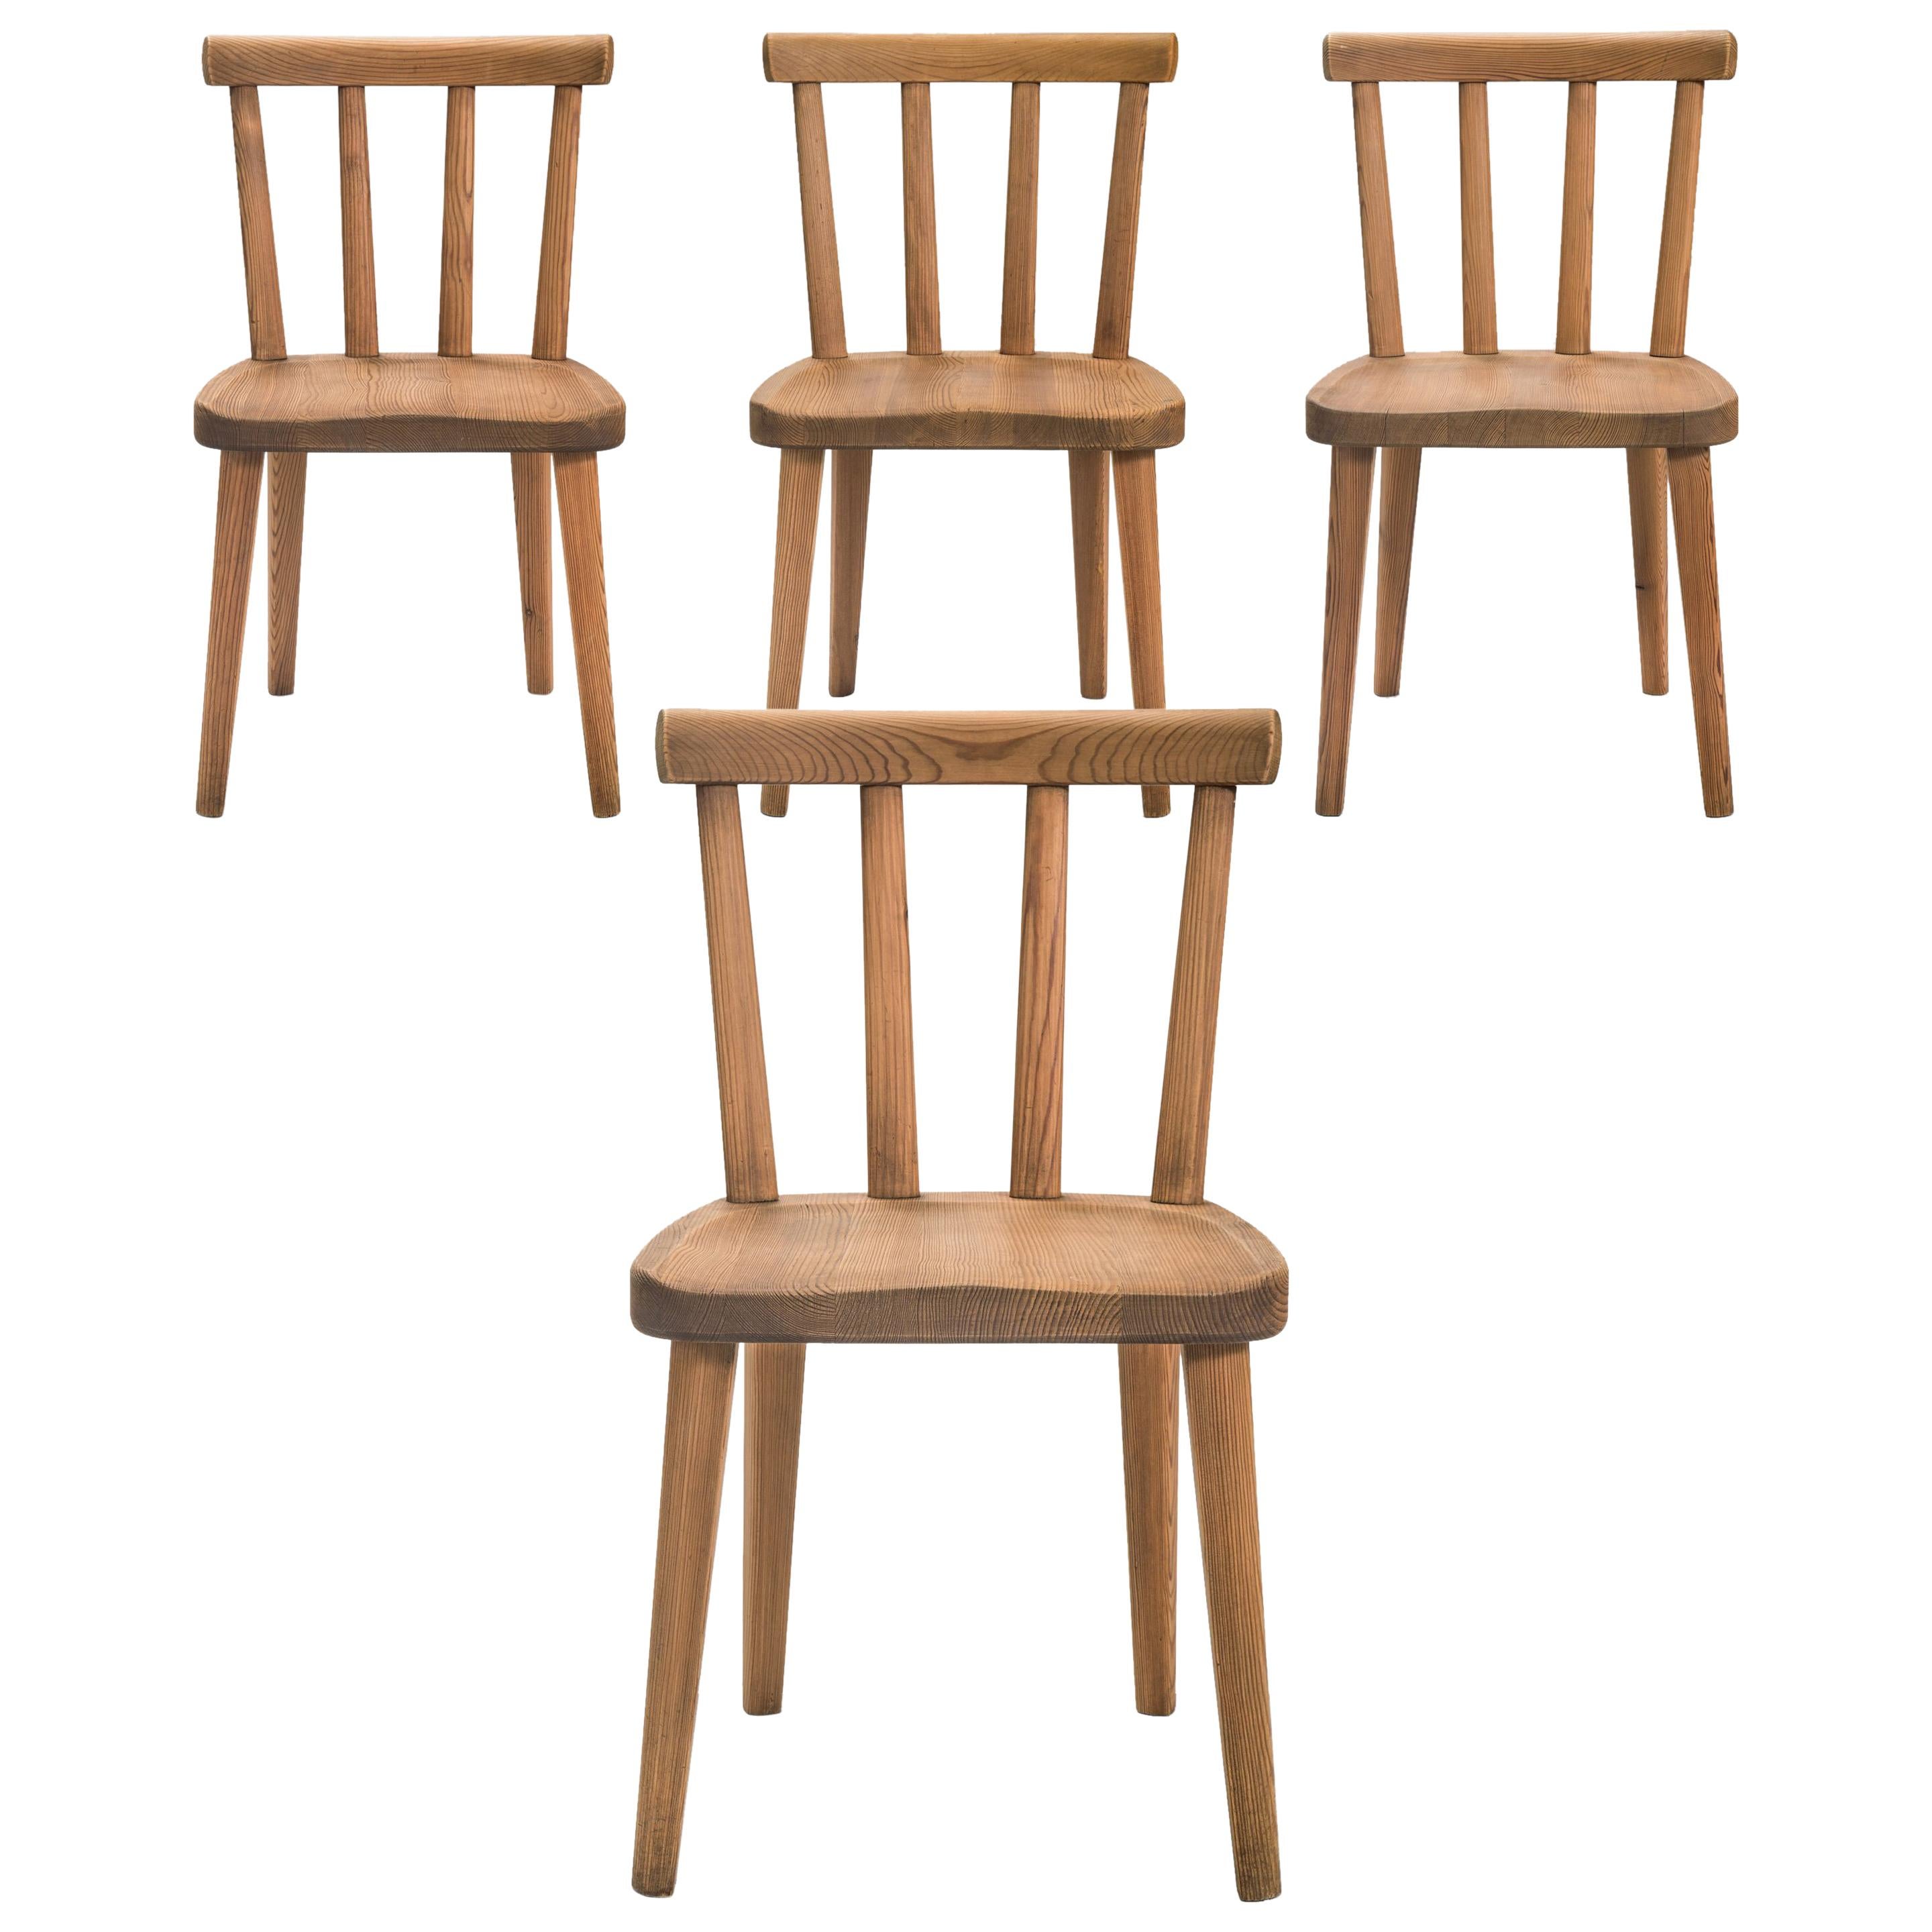 Axel-Einar Hjorth, for Nordiska Kompaniet, Set of 4 Uto Solid Pine Chairs